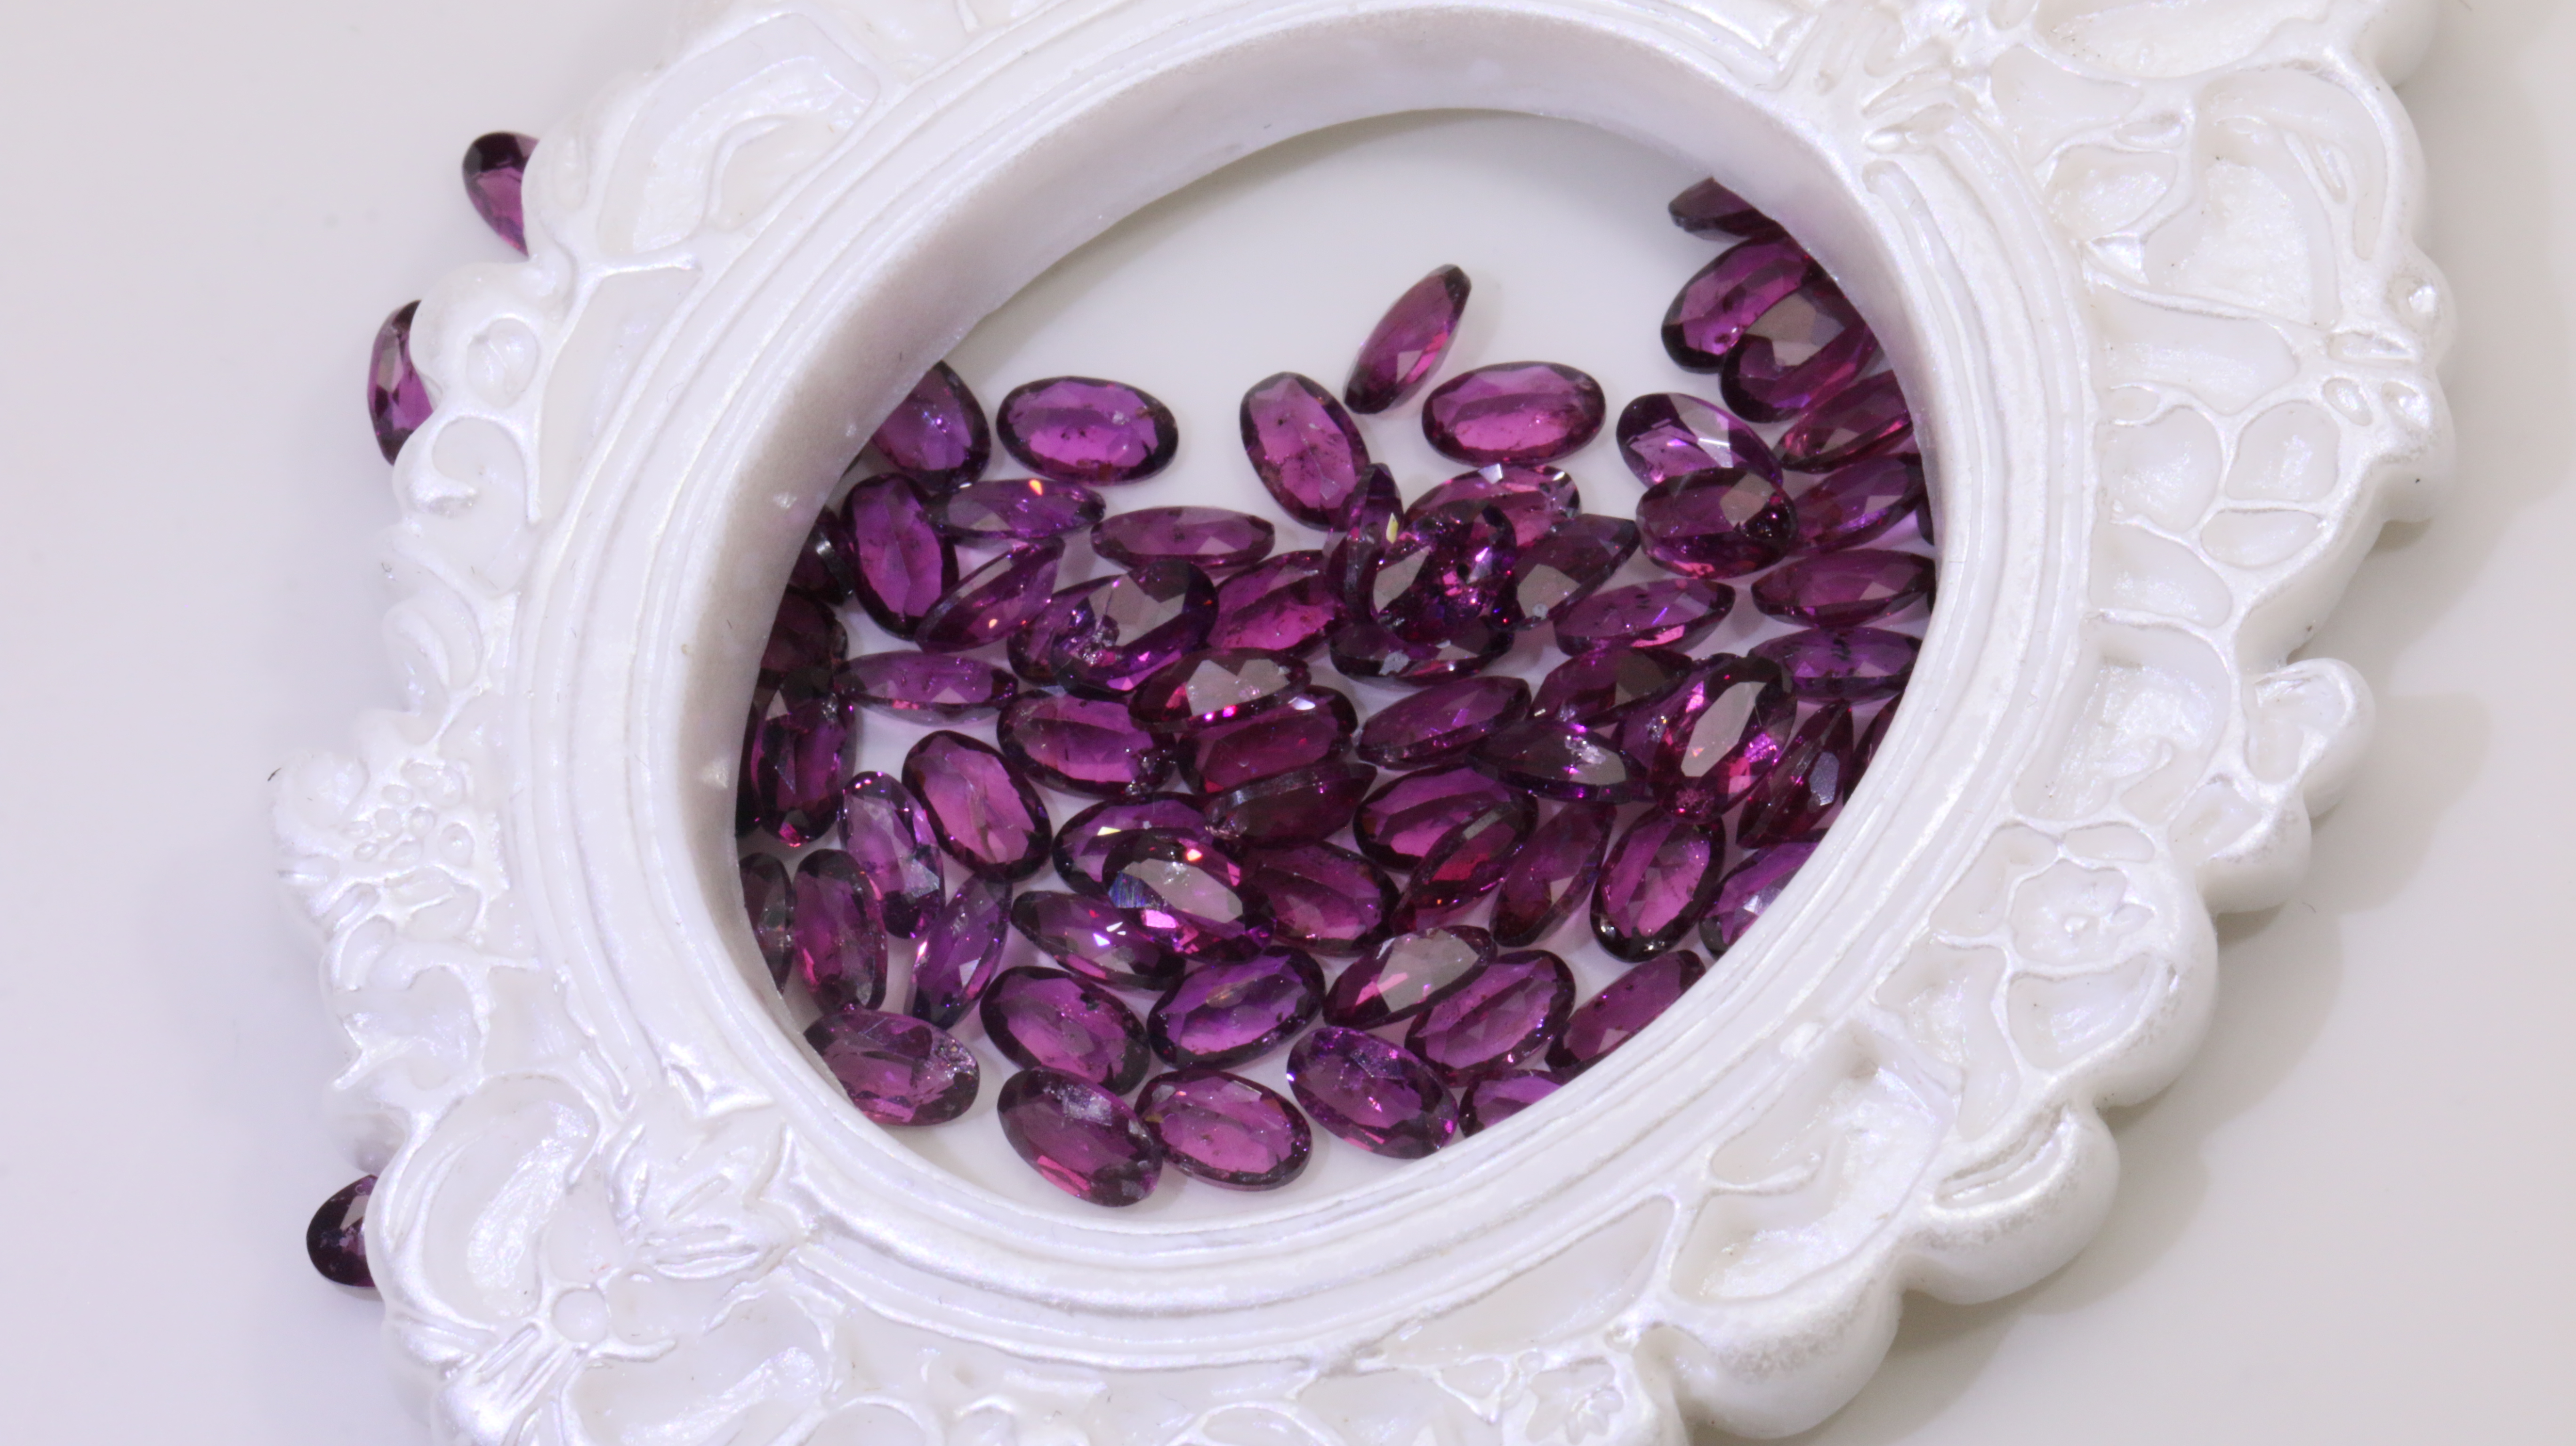 Is purple garnet worth anything?